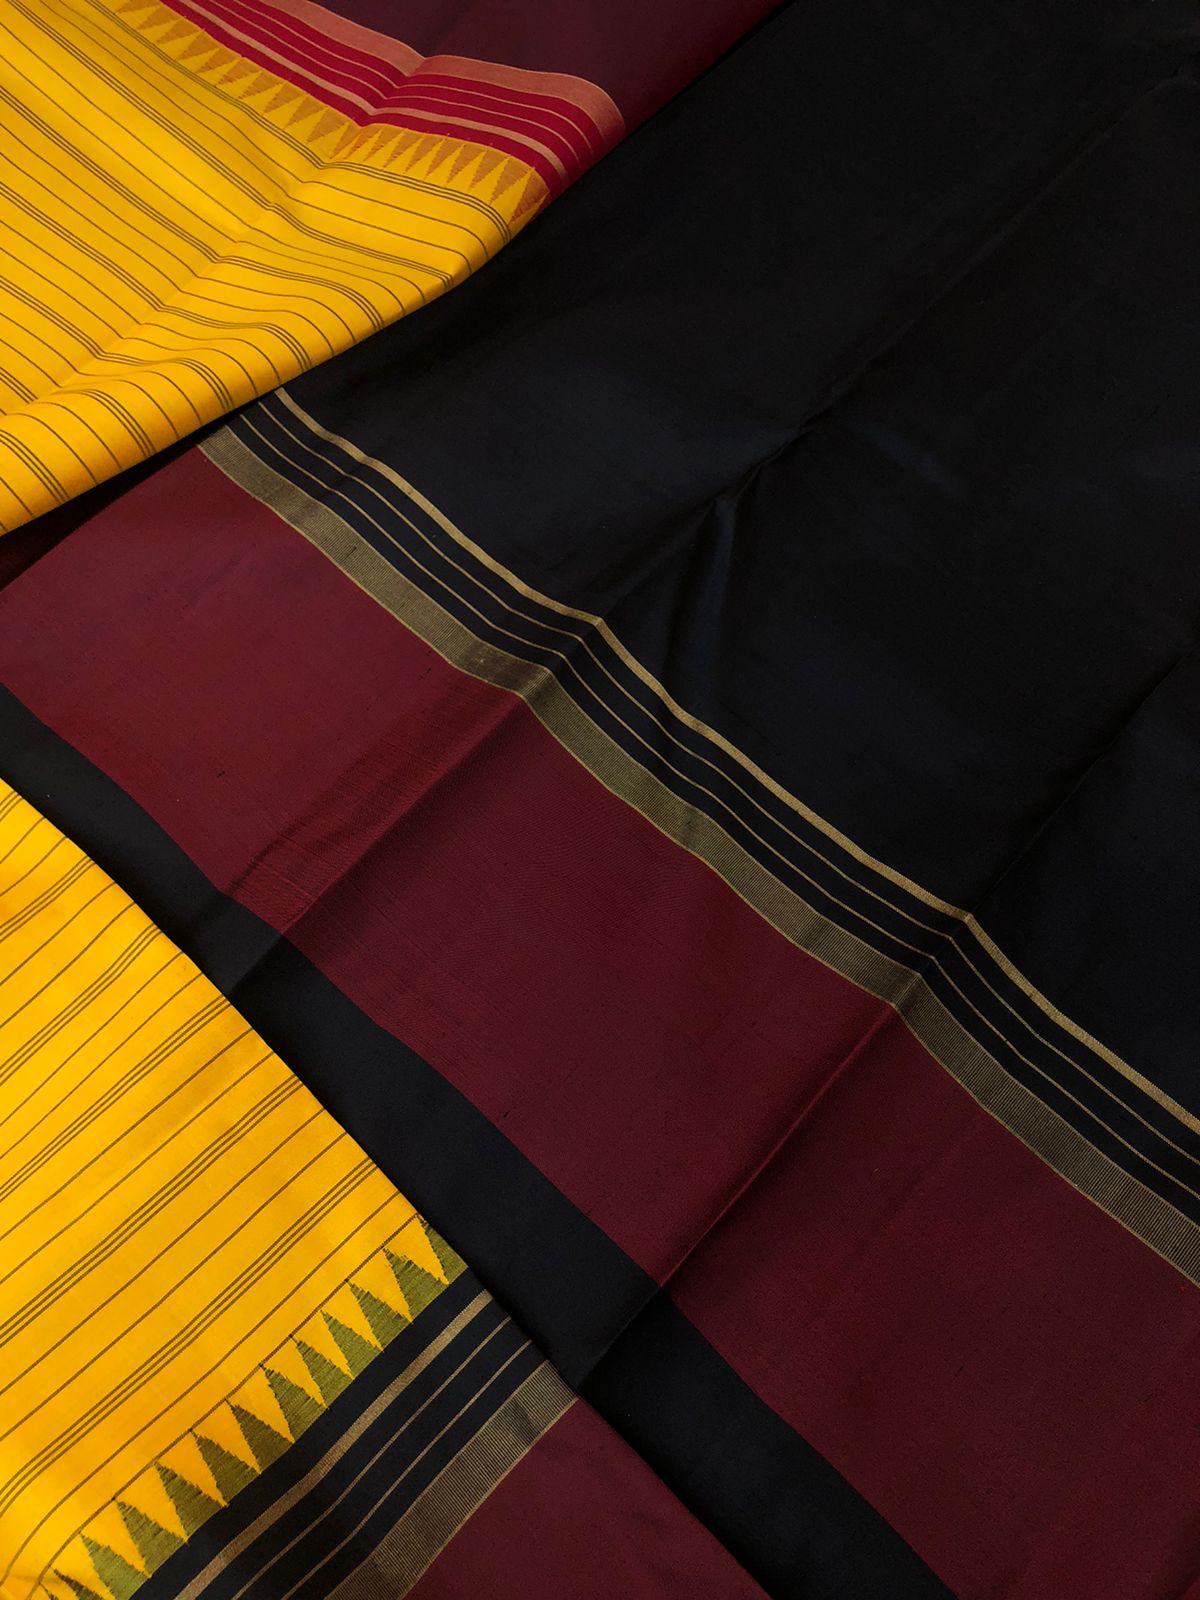 Connected by Korvai on Kanchivaram - traditionaly stunning mustard and black maroon ganga jammuna woven borders